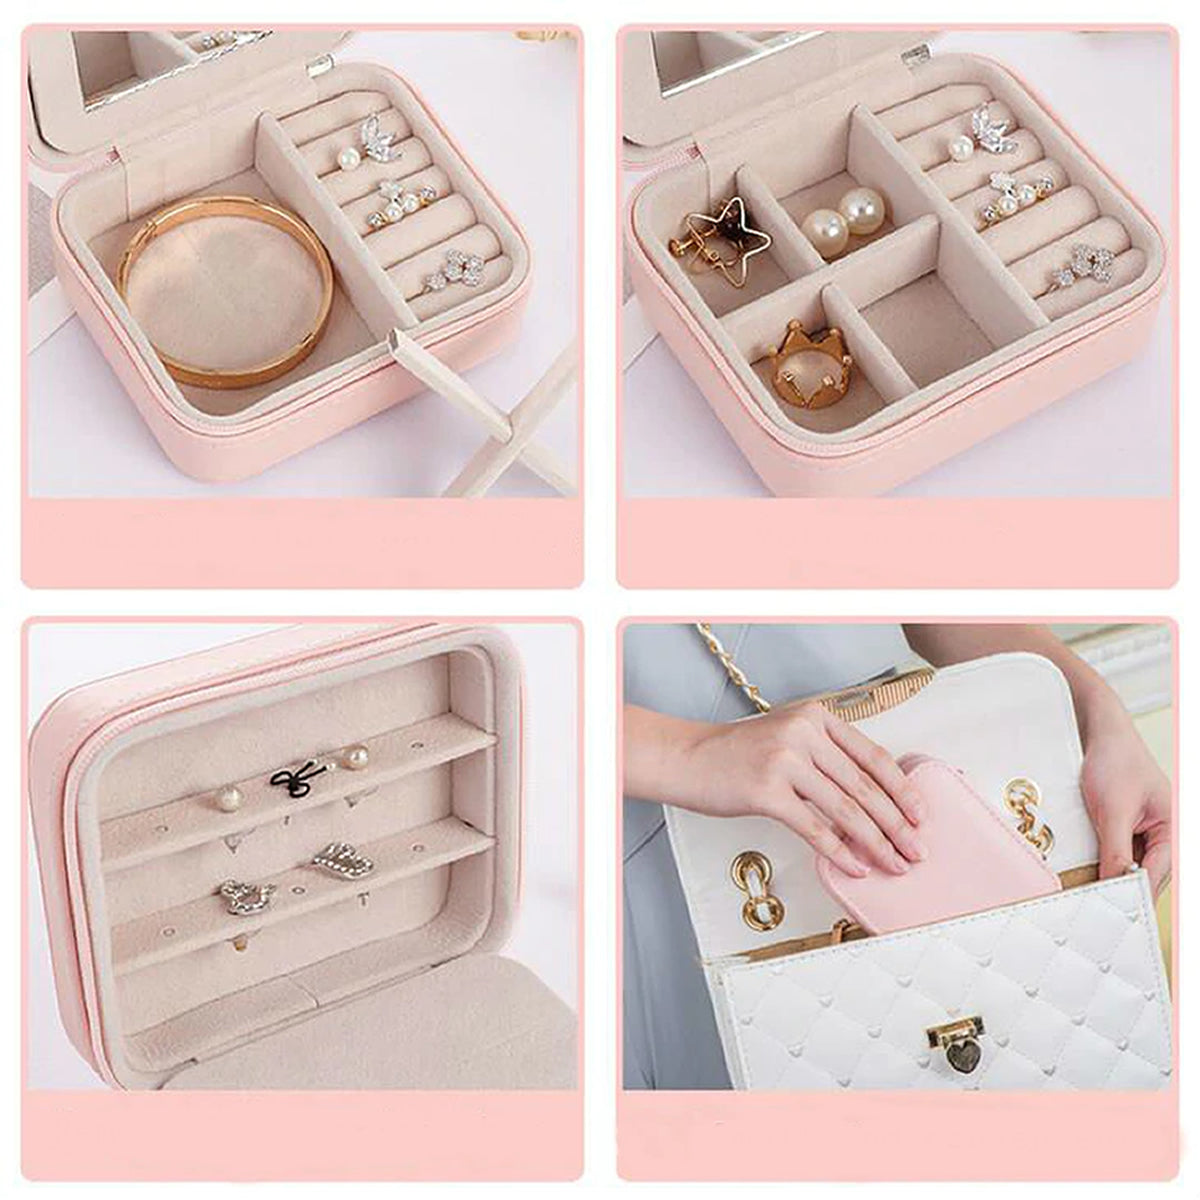 Cool Jewels A Palm Sized Compact Jewelry Box